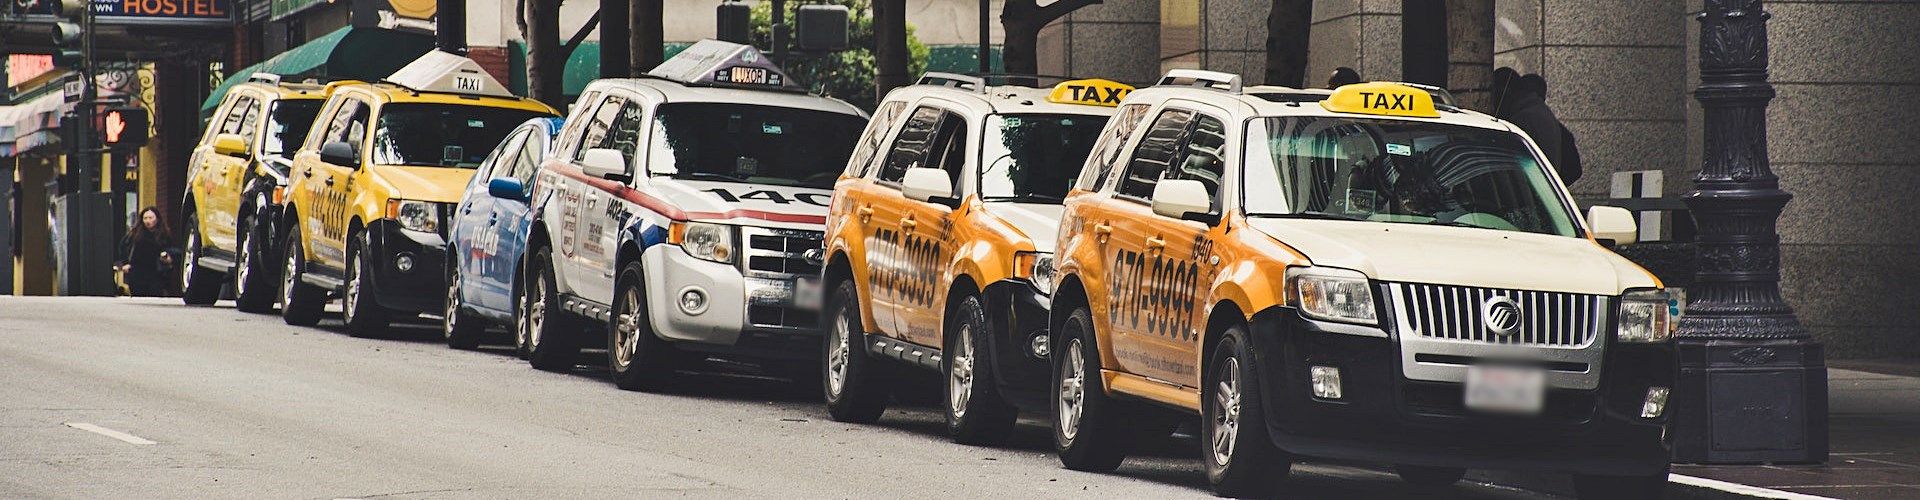 Gestion de flotas de taxi 1 1 | Avanti Renting